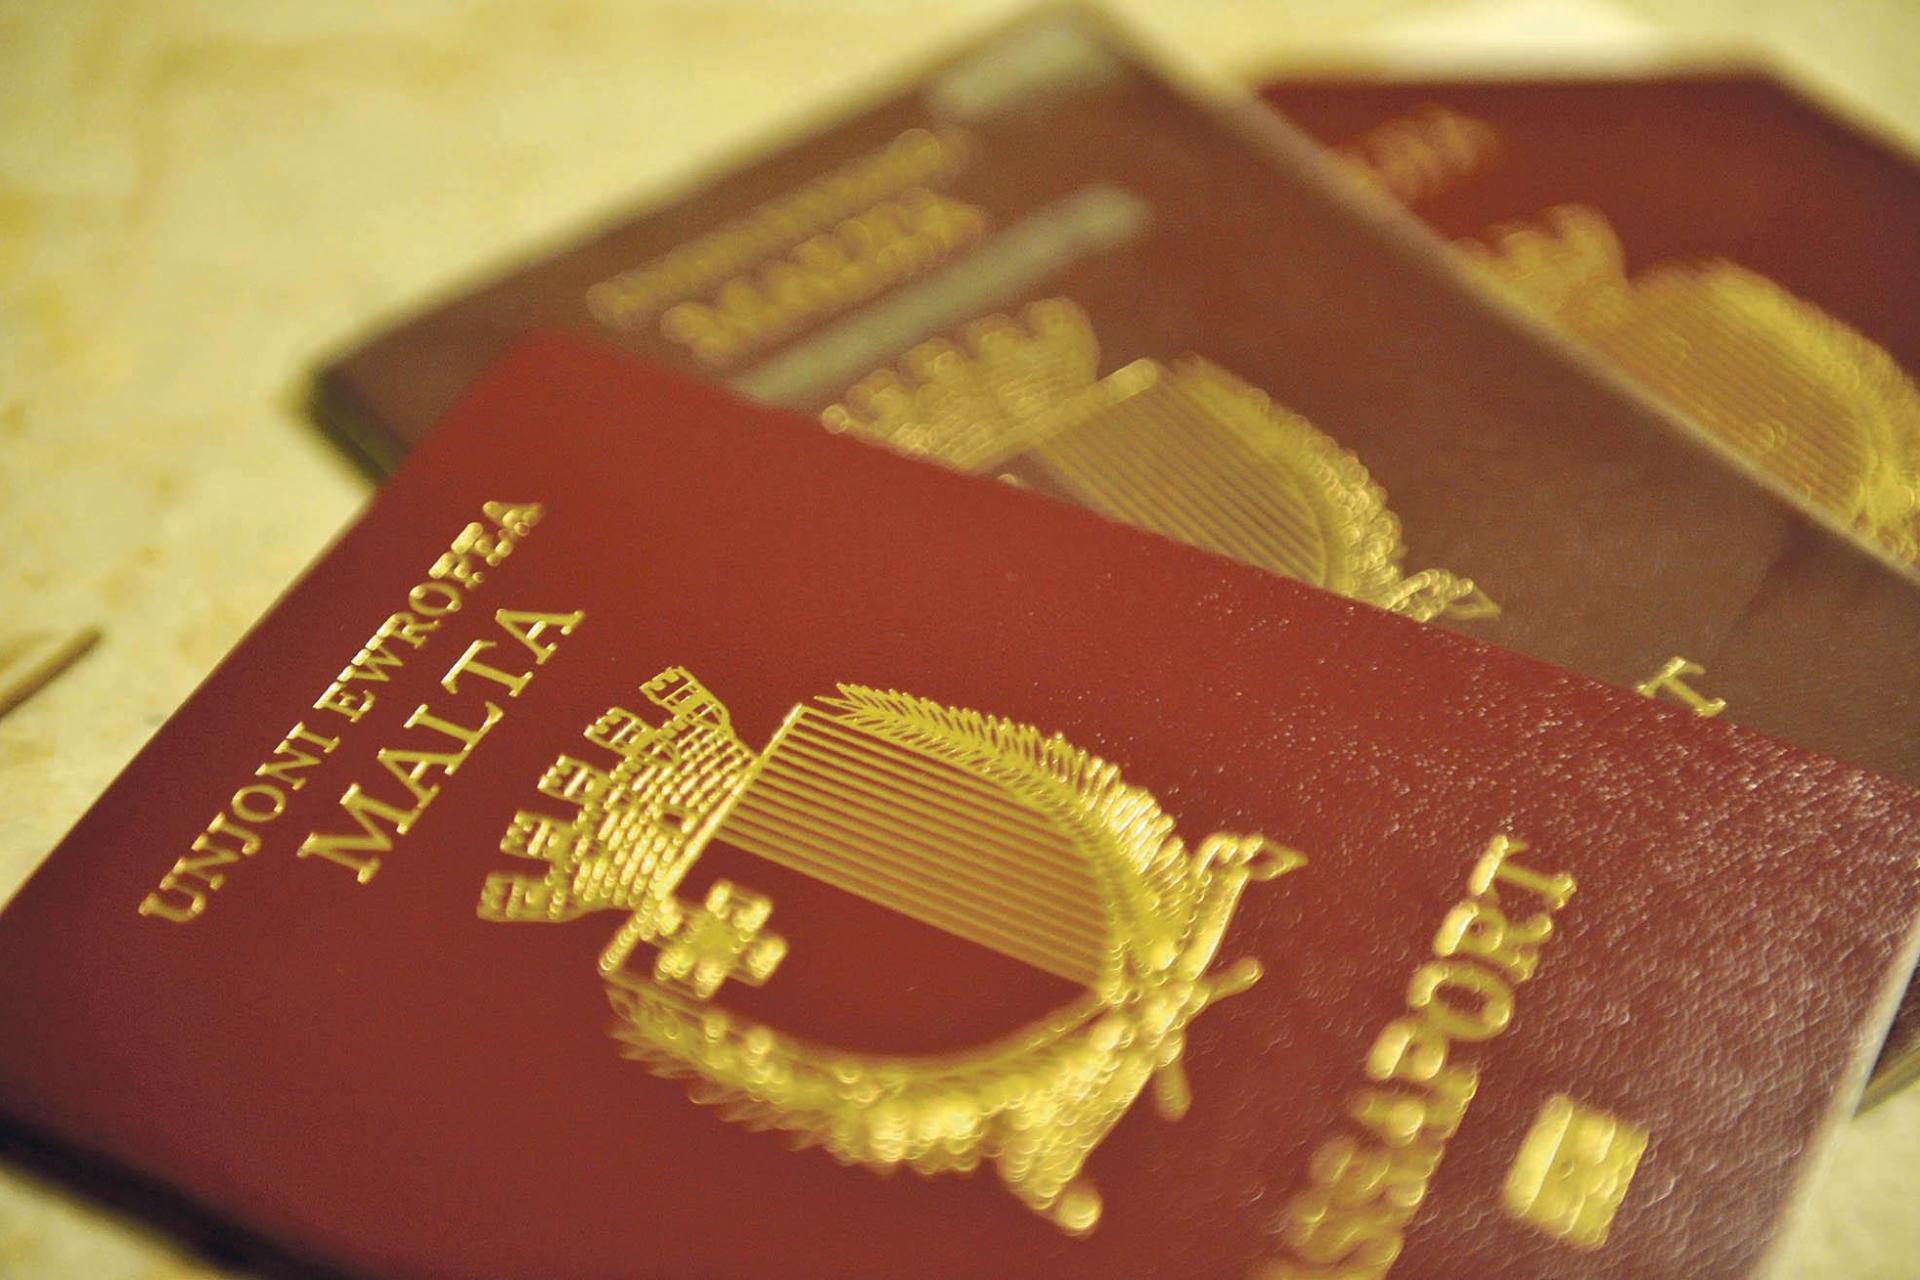 Malta: The world’s 7th most powerful passport